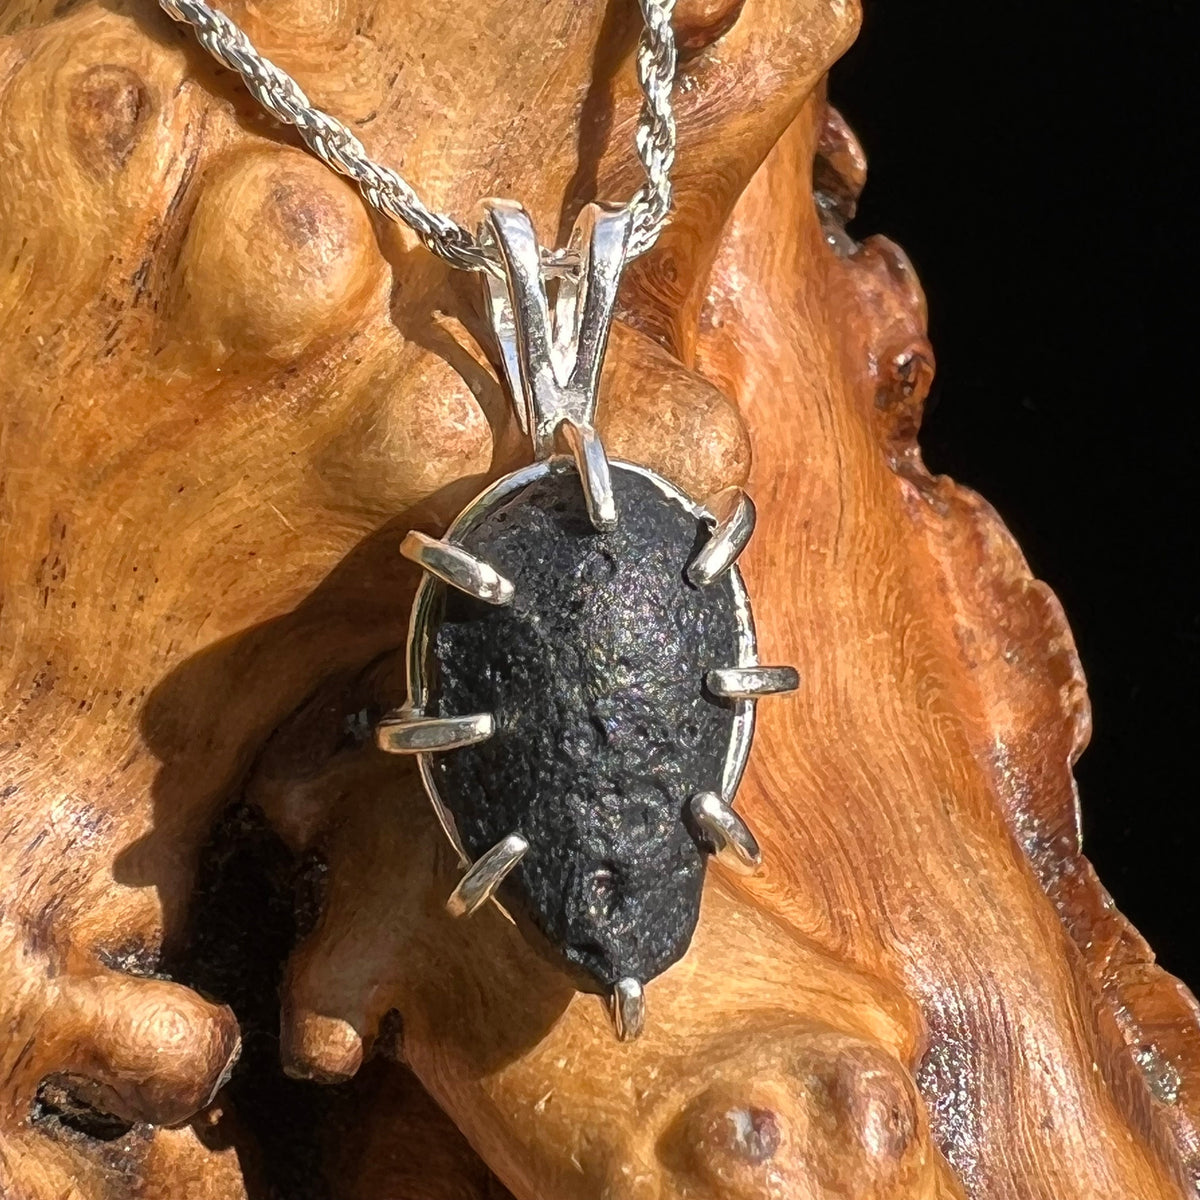 Australite Pendant Necklace Sterling Silver #2950-Moldavite Life